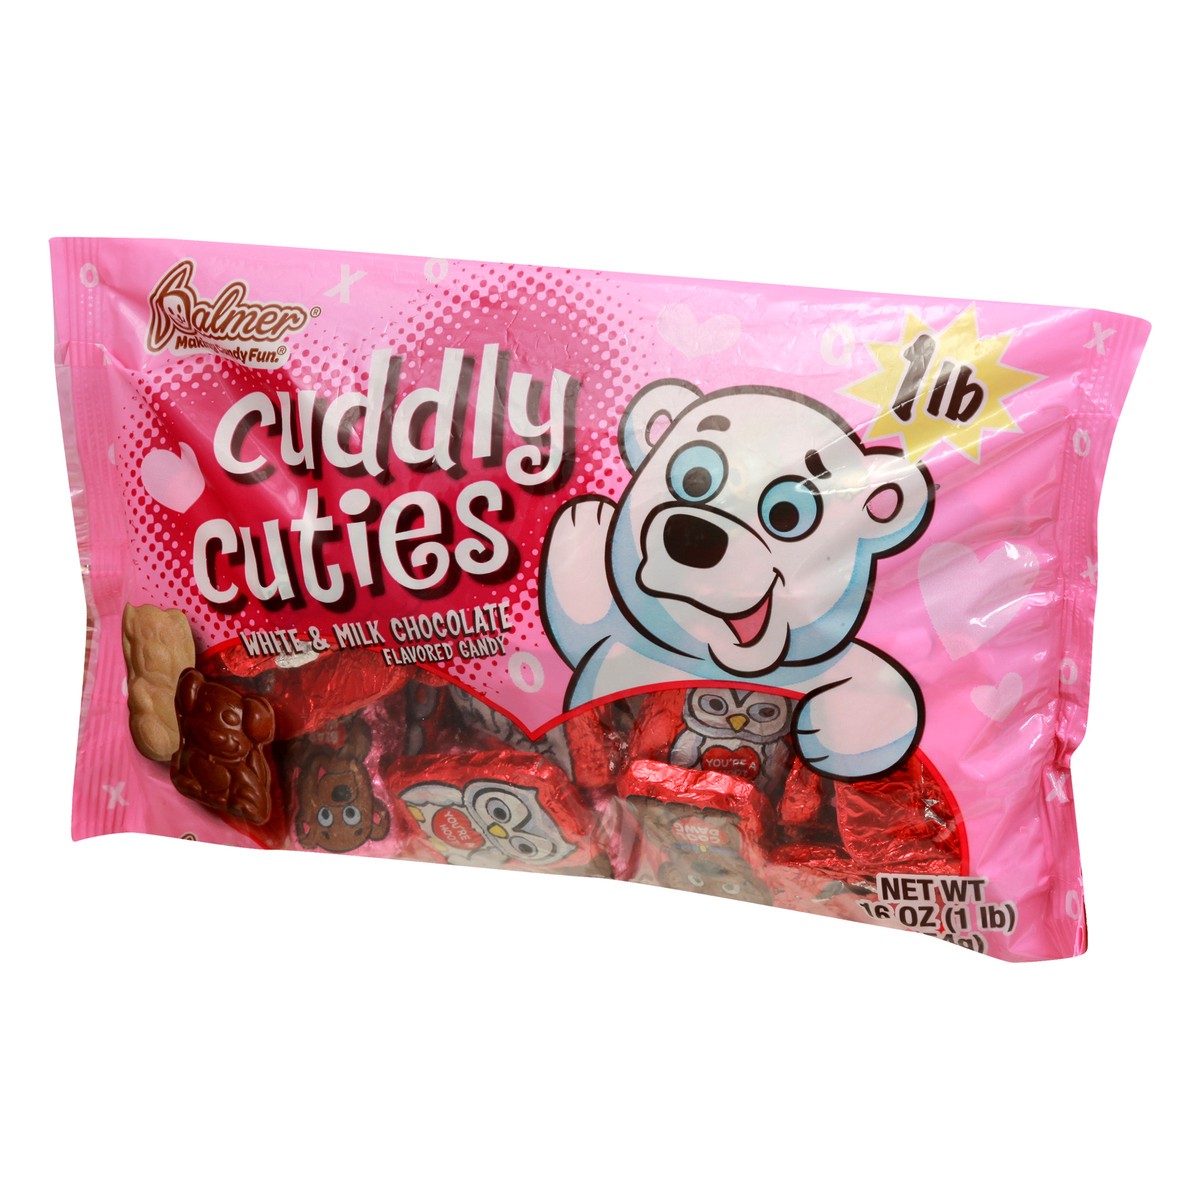 slide 9 of 12, Palmer Cuddly Cuties White & Milk Chocolate Candy 16 oz, 16 oz